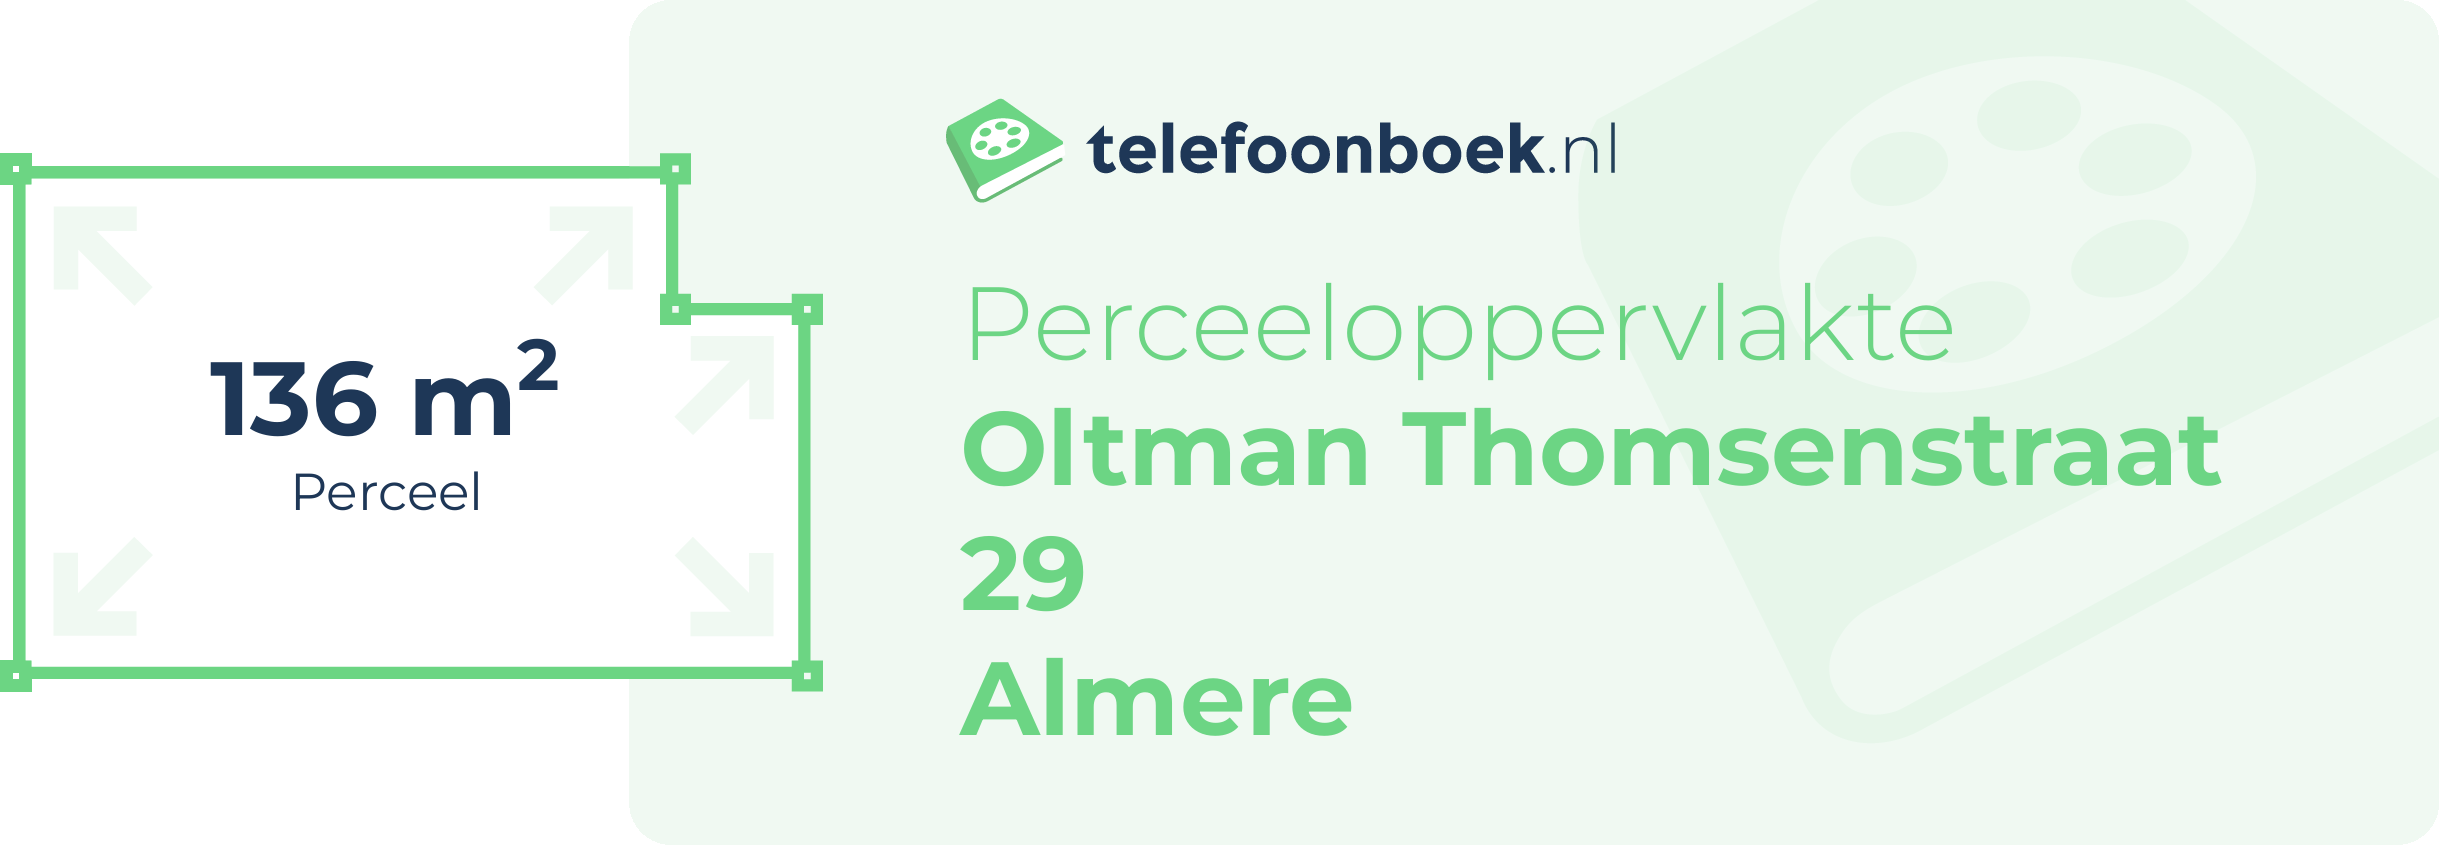 Perceeloppervlakte Oltman Thomsenstraat 29 Almere